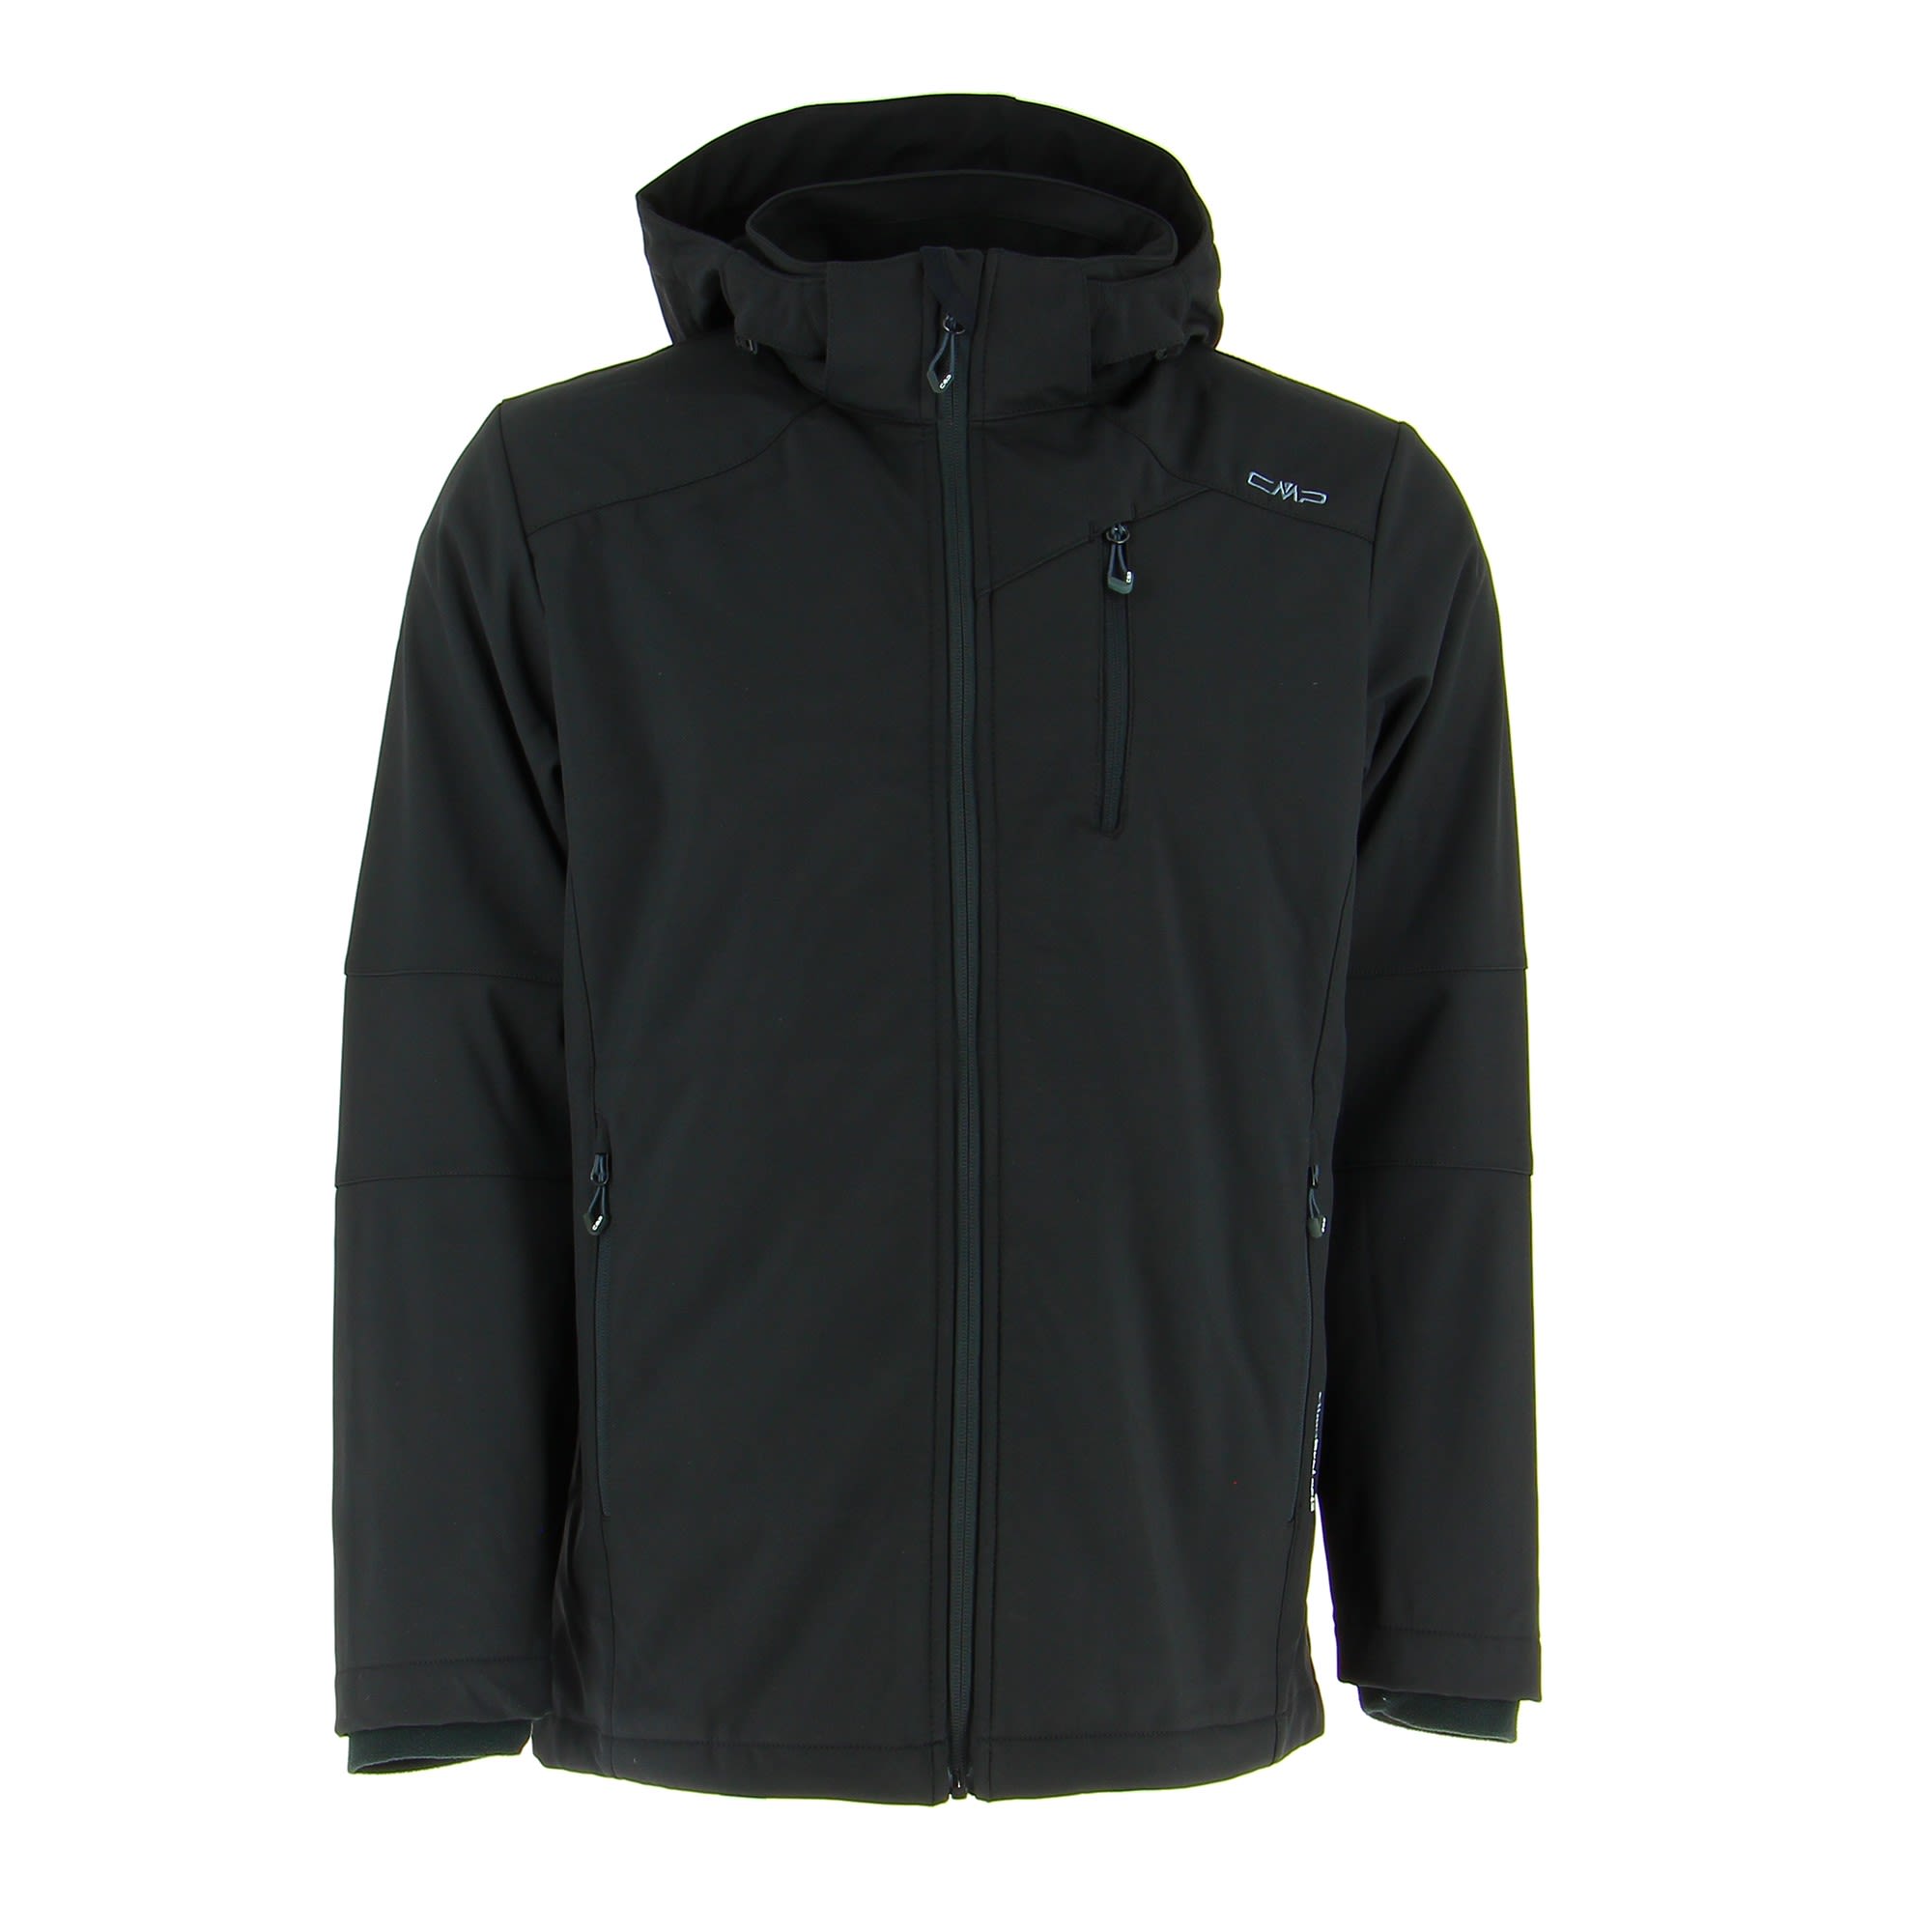 CMP Jacket Zip Hood Softshell Comfort FIt Long Male Softshelljacken- Grsse 48 - Farbe Nero unter CMP